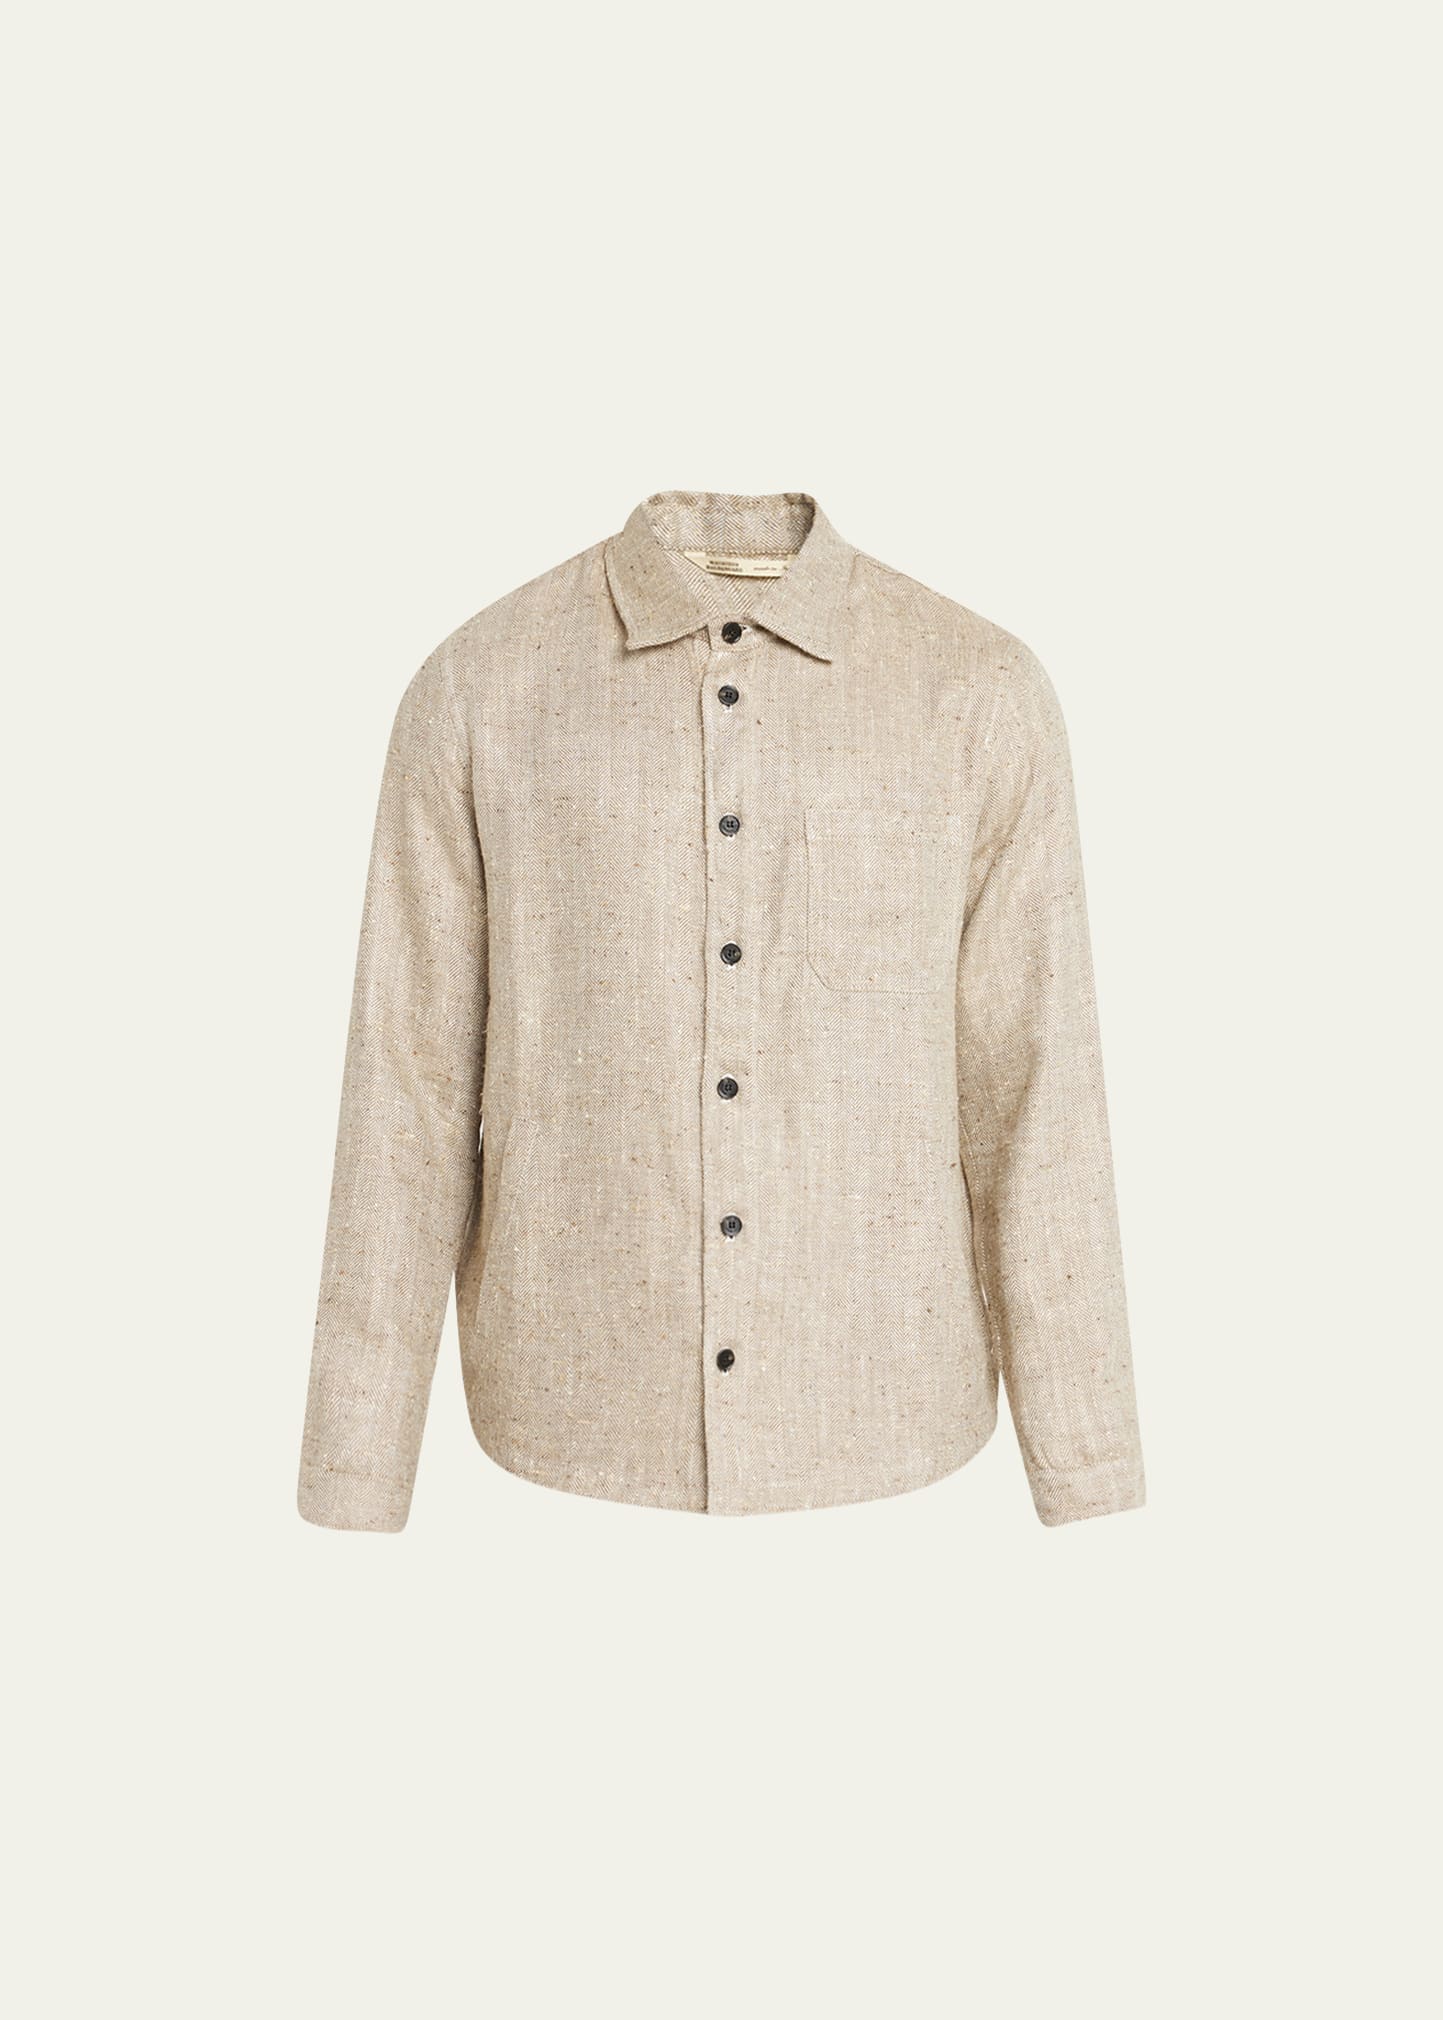 Baldassari Men's Linen-Silk Donegal Chore Jacket